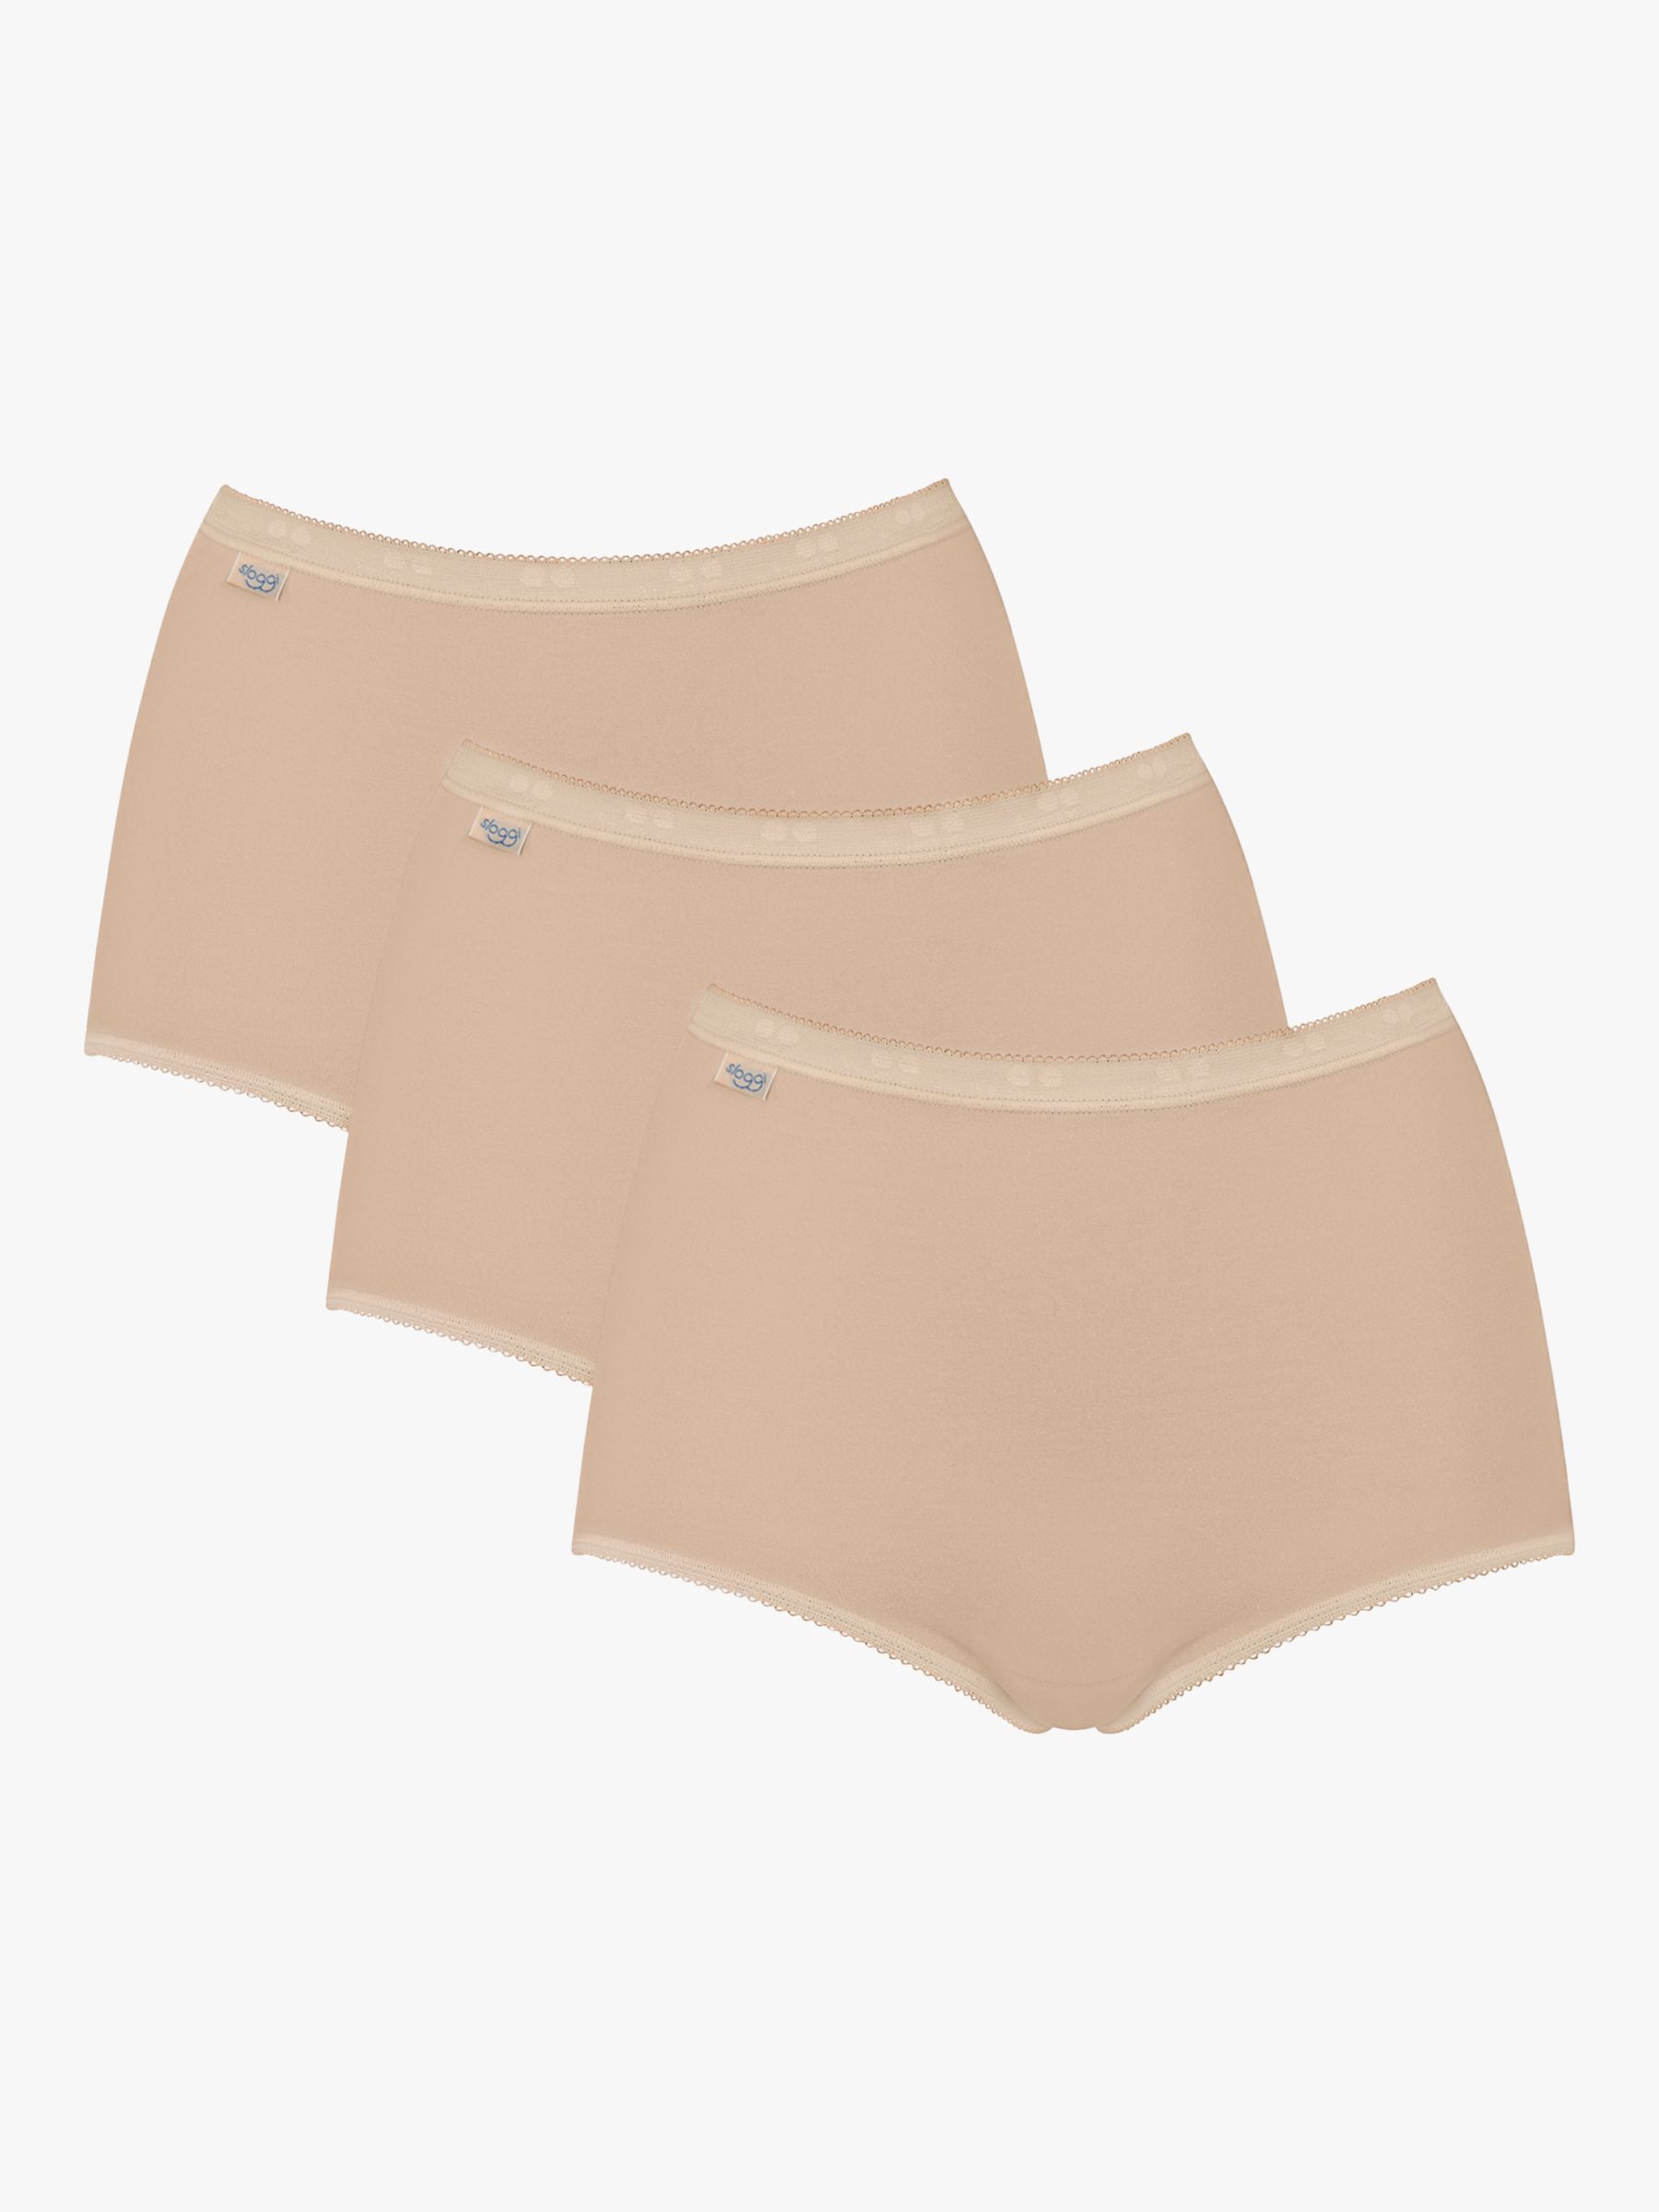 John Lewis Underwear Genevieve Lace Women Briefs / Nude Size UK 14